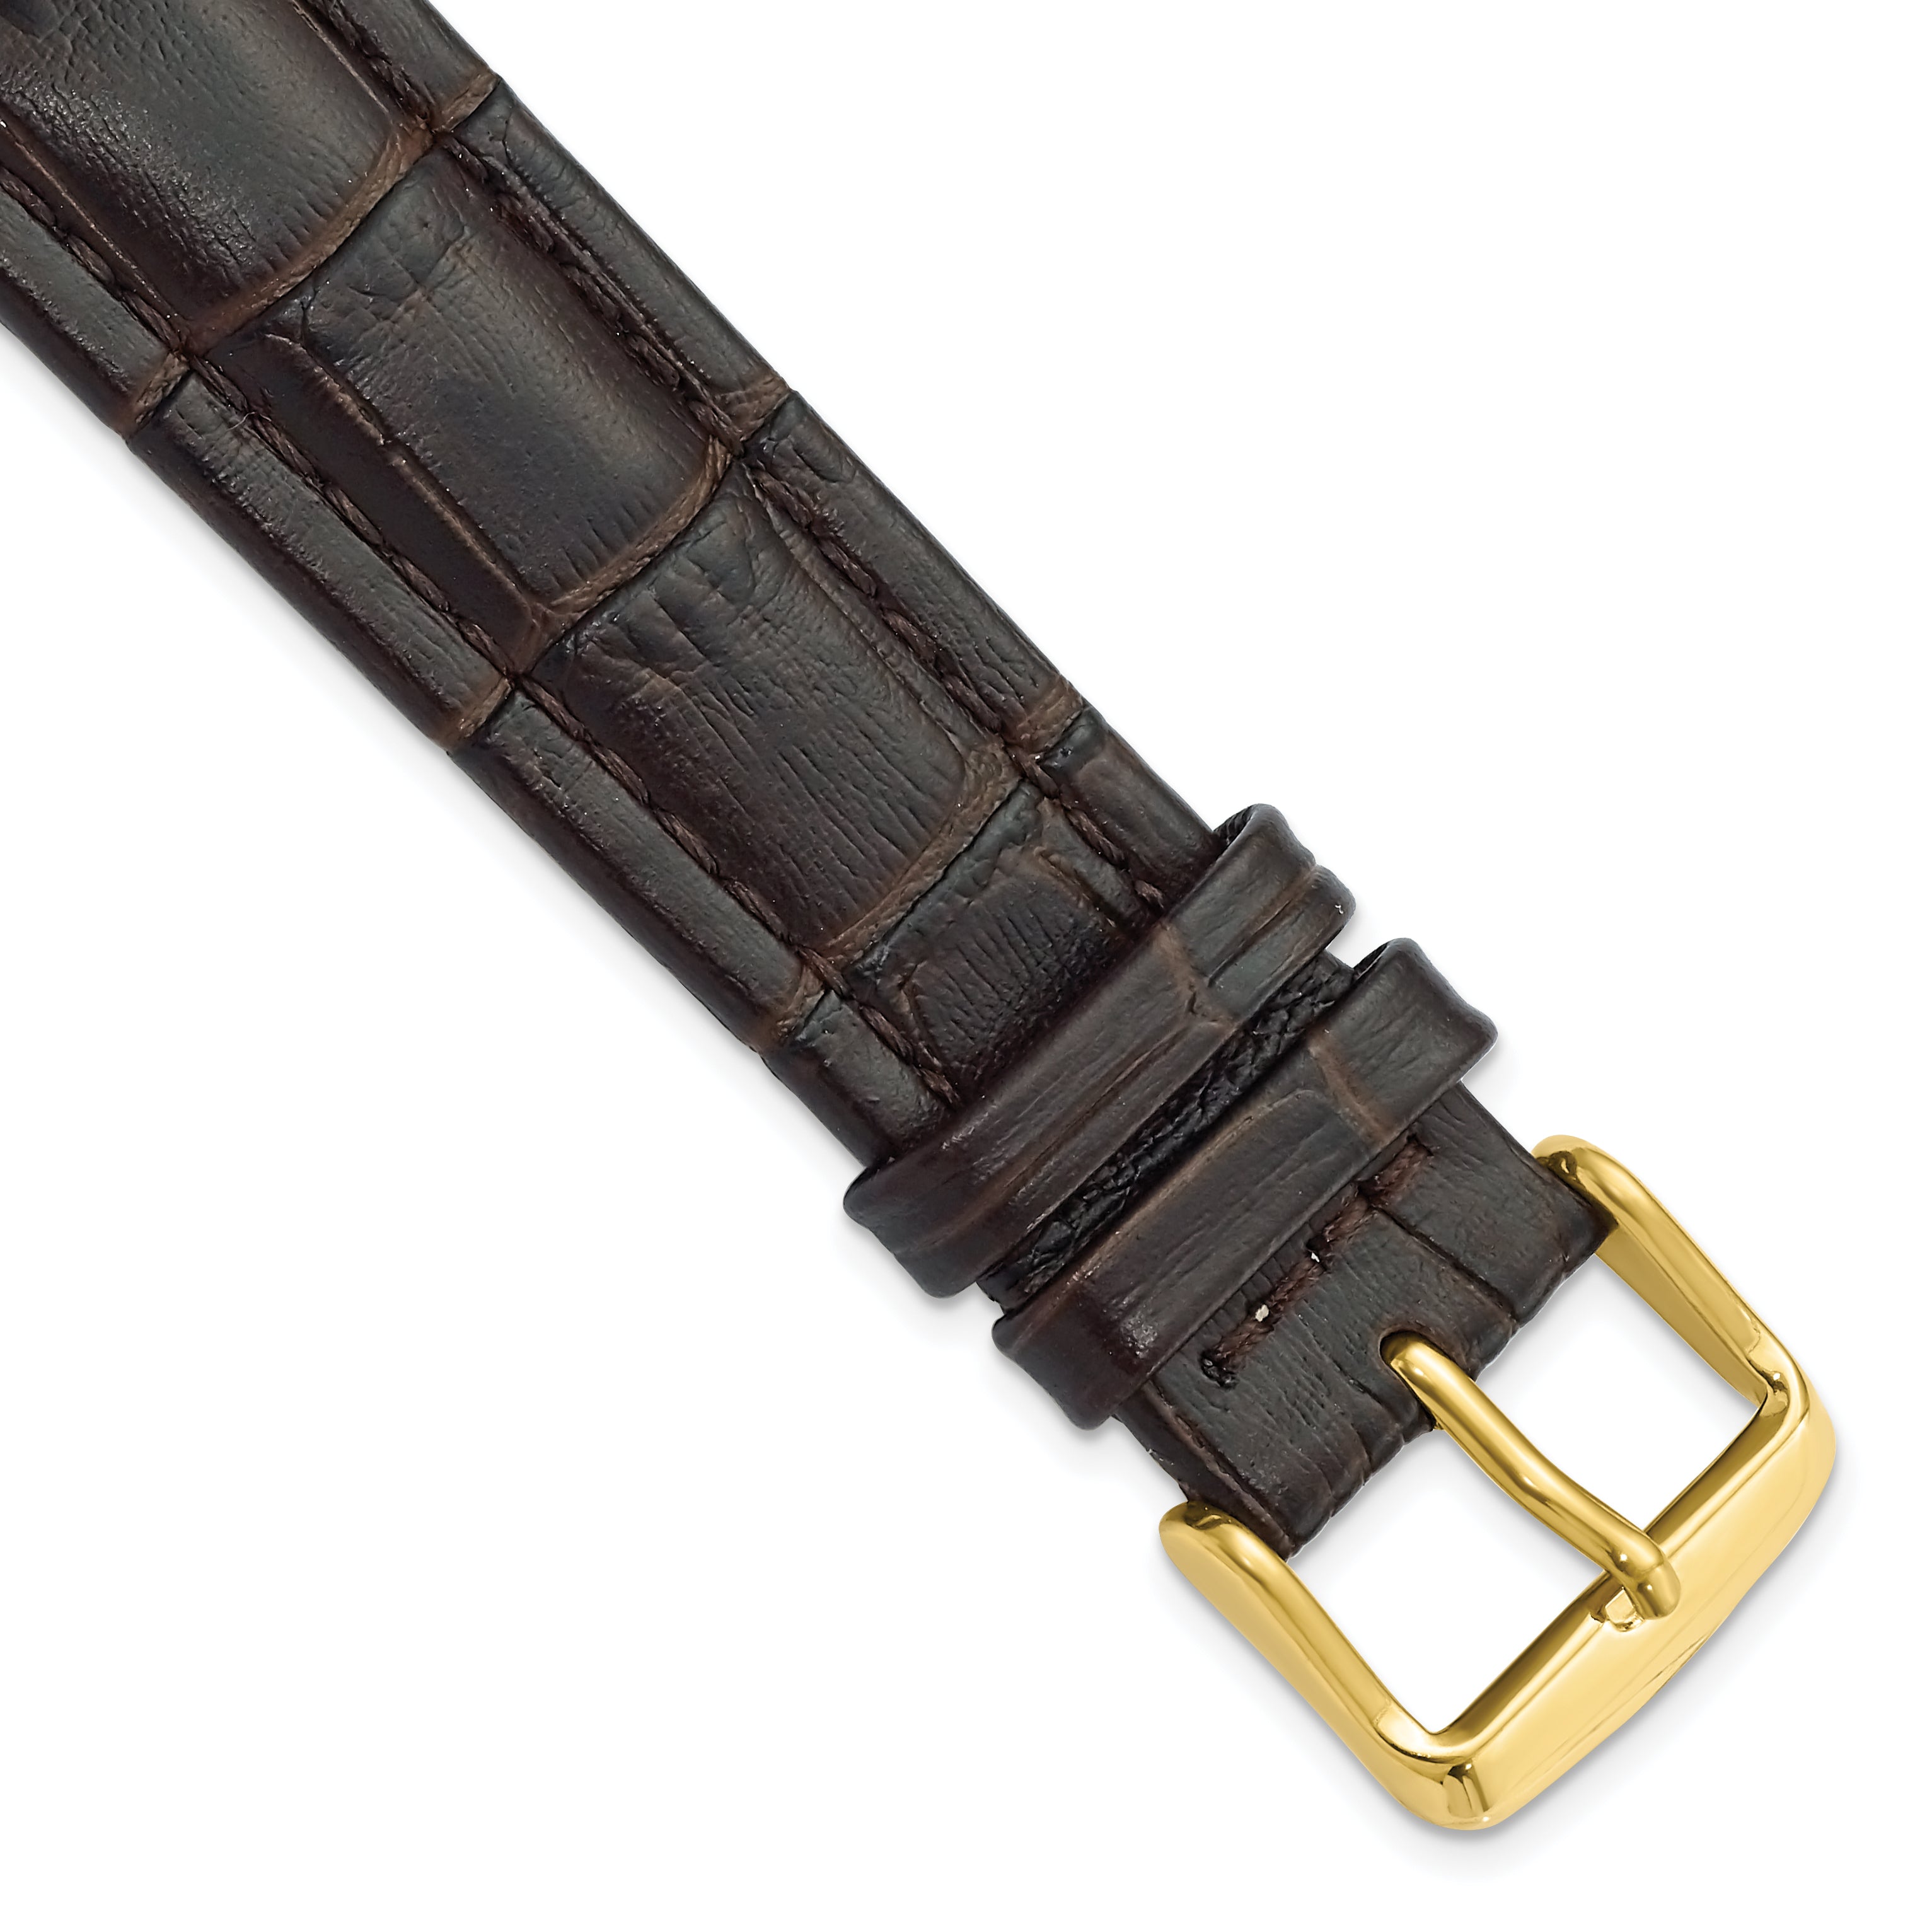 DeBeer 20mm Dark Brown Matte Alligator Grain Leather with Gold-tone Buckle 7.5 inch Watch Band